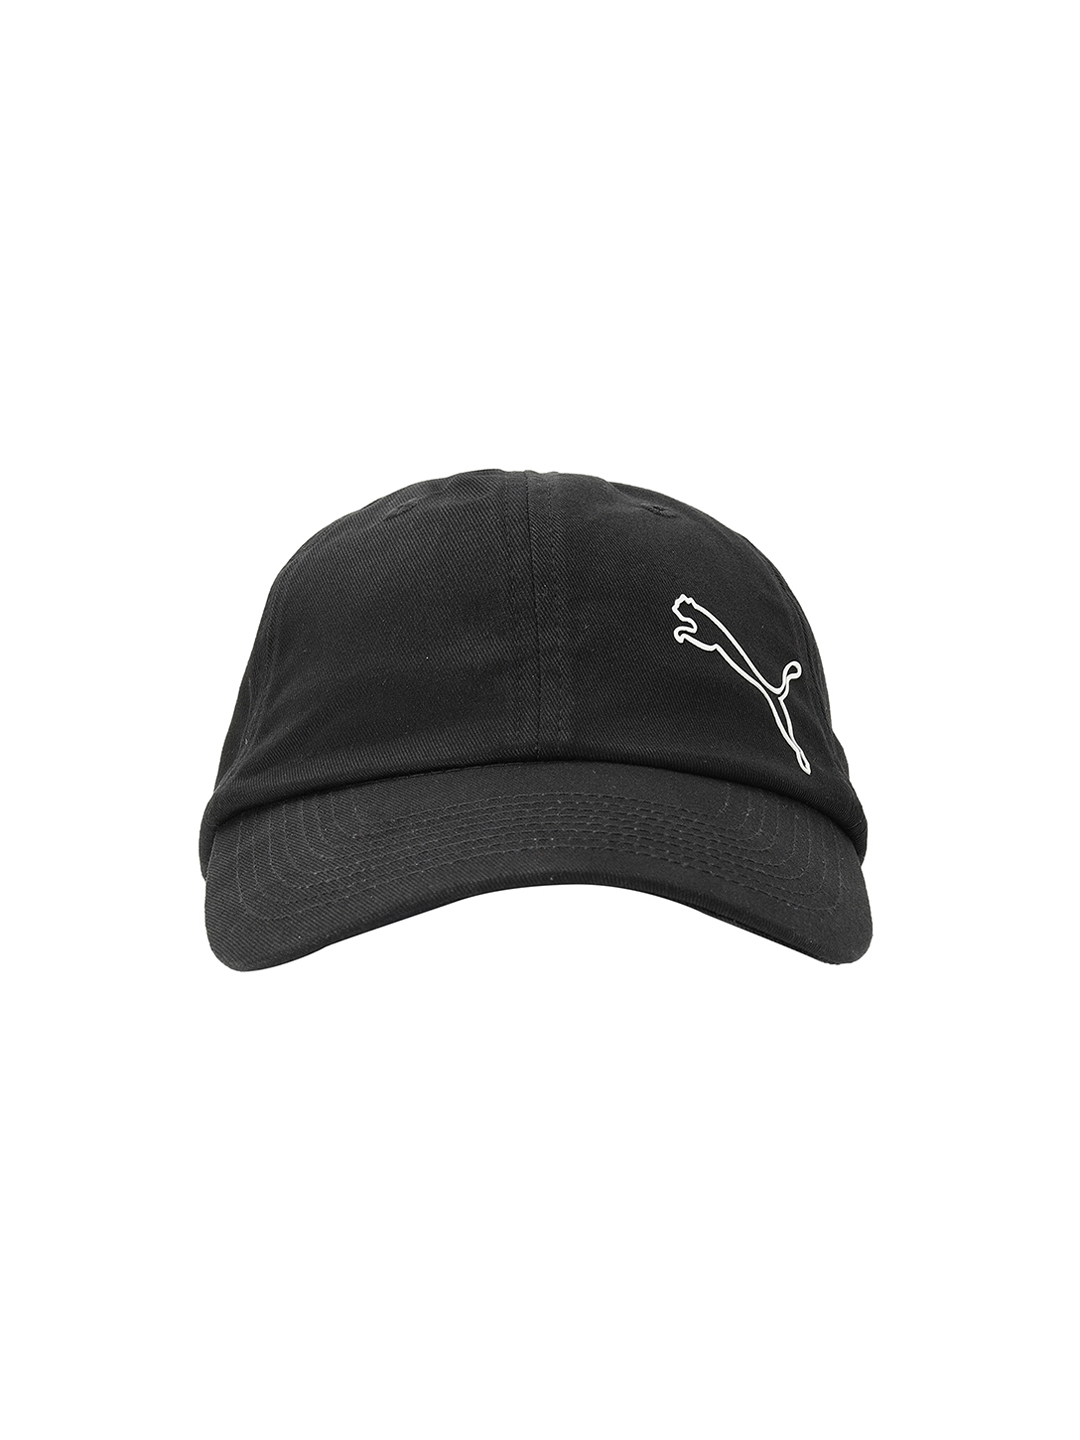 Puma Unisex Black Solid Ess Cap II Baseball Cap